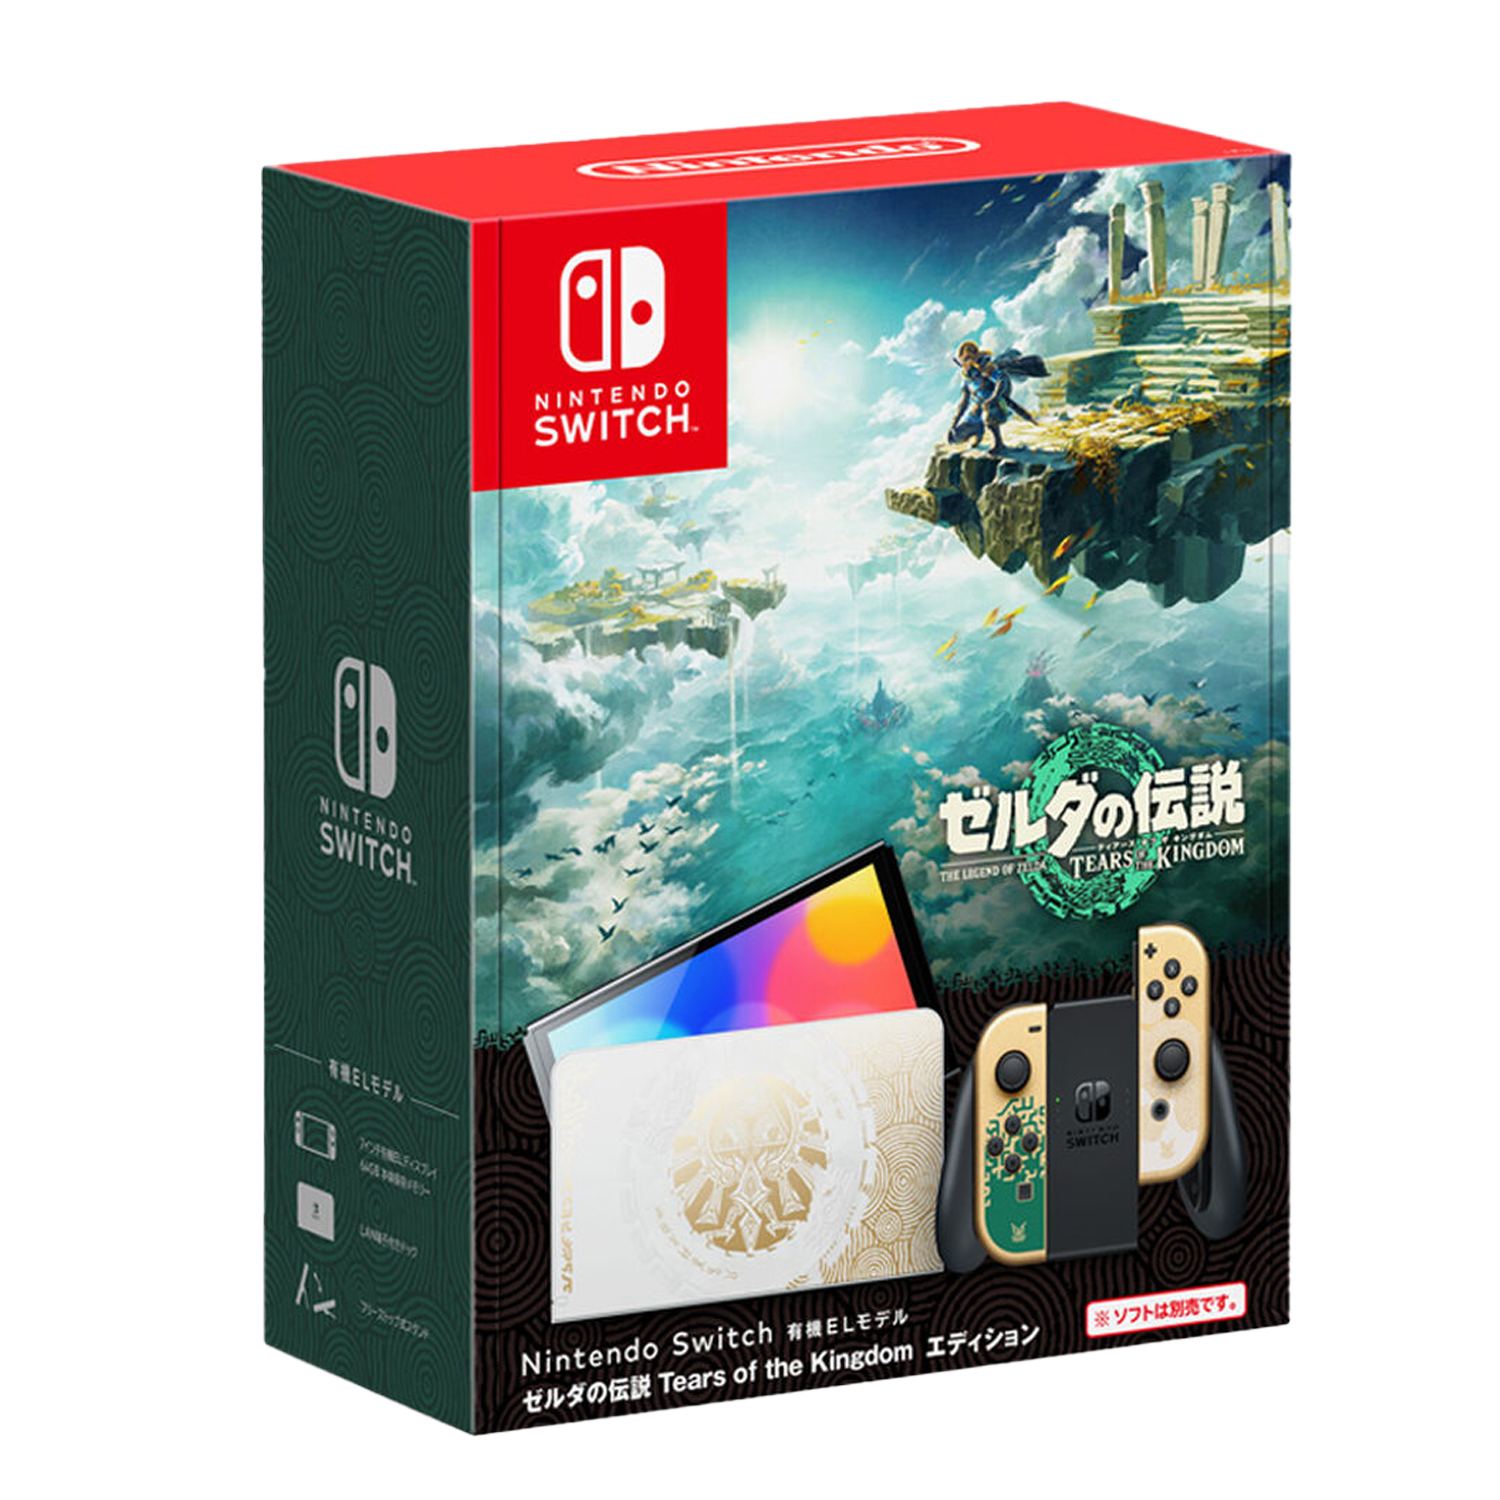 Nintendo Switch OLED Model [The Legend of Zelda: Tears of